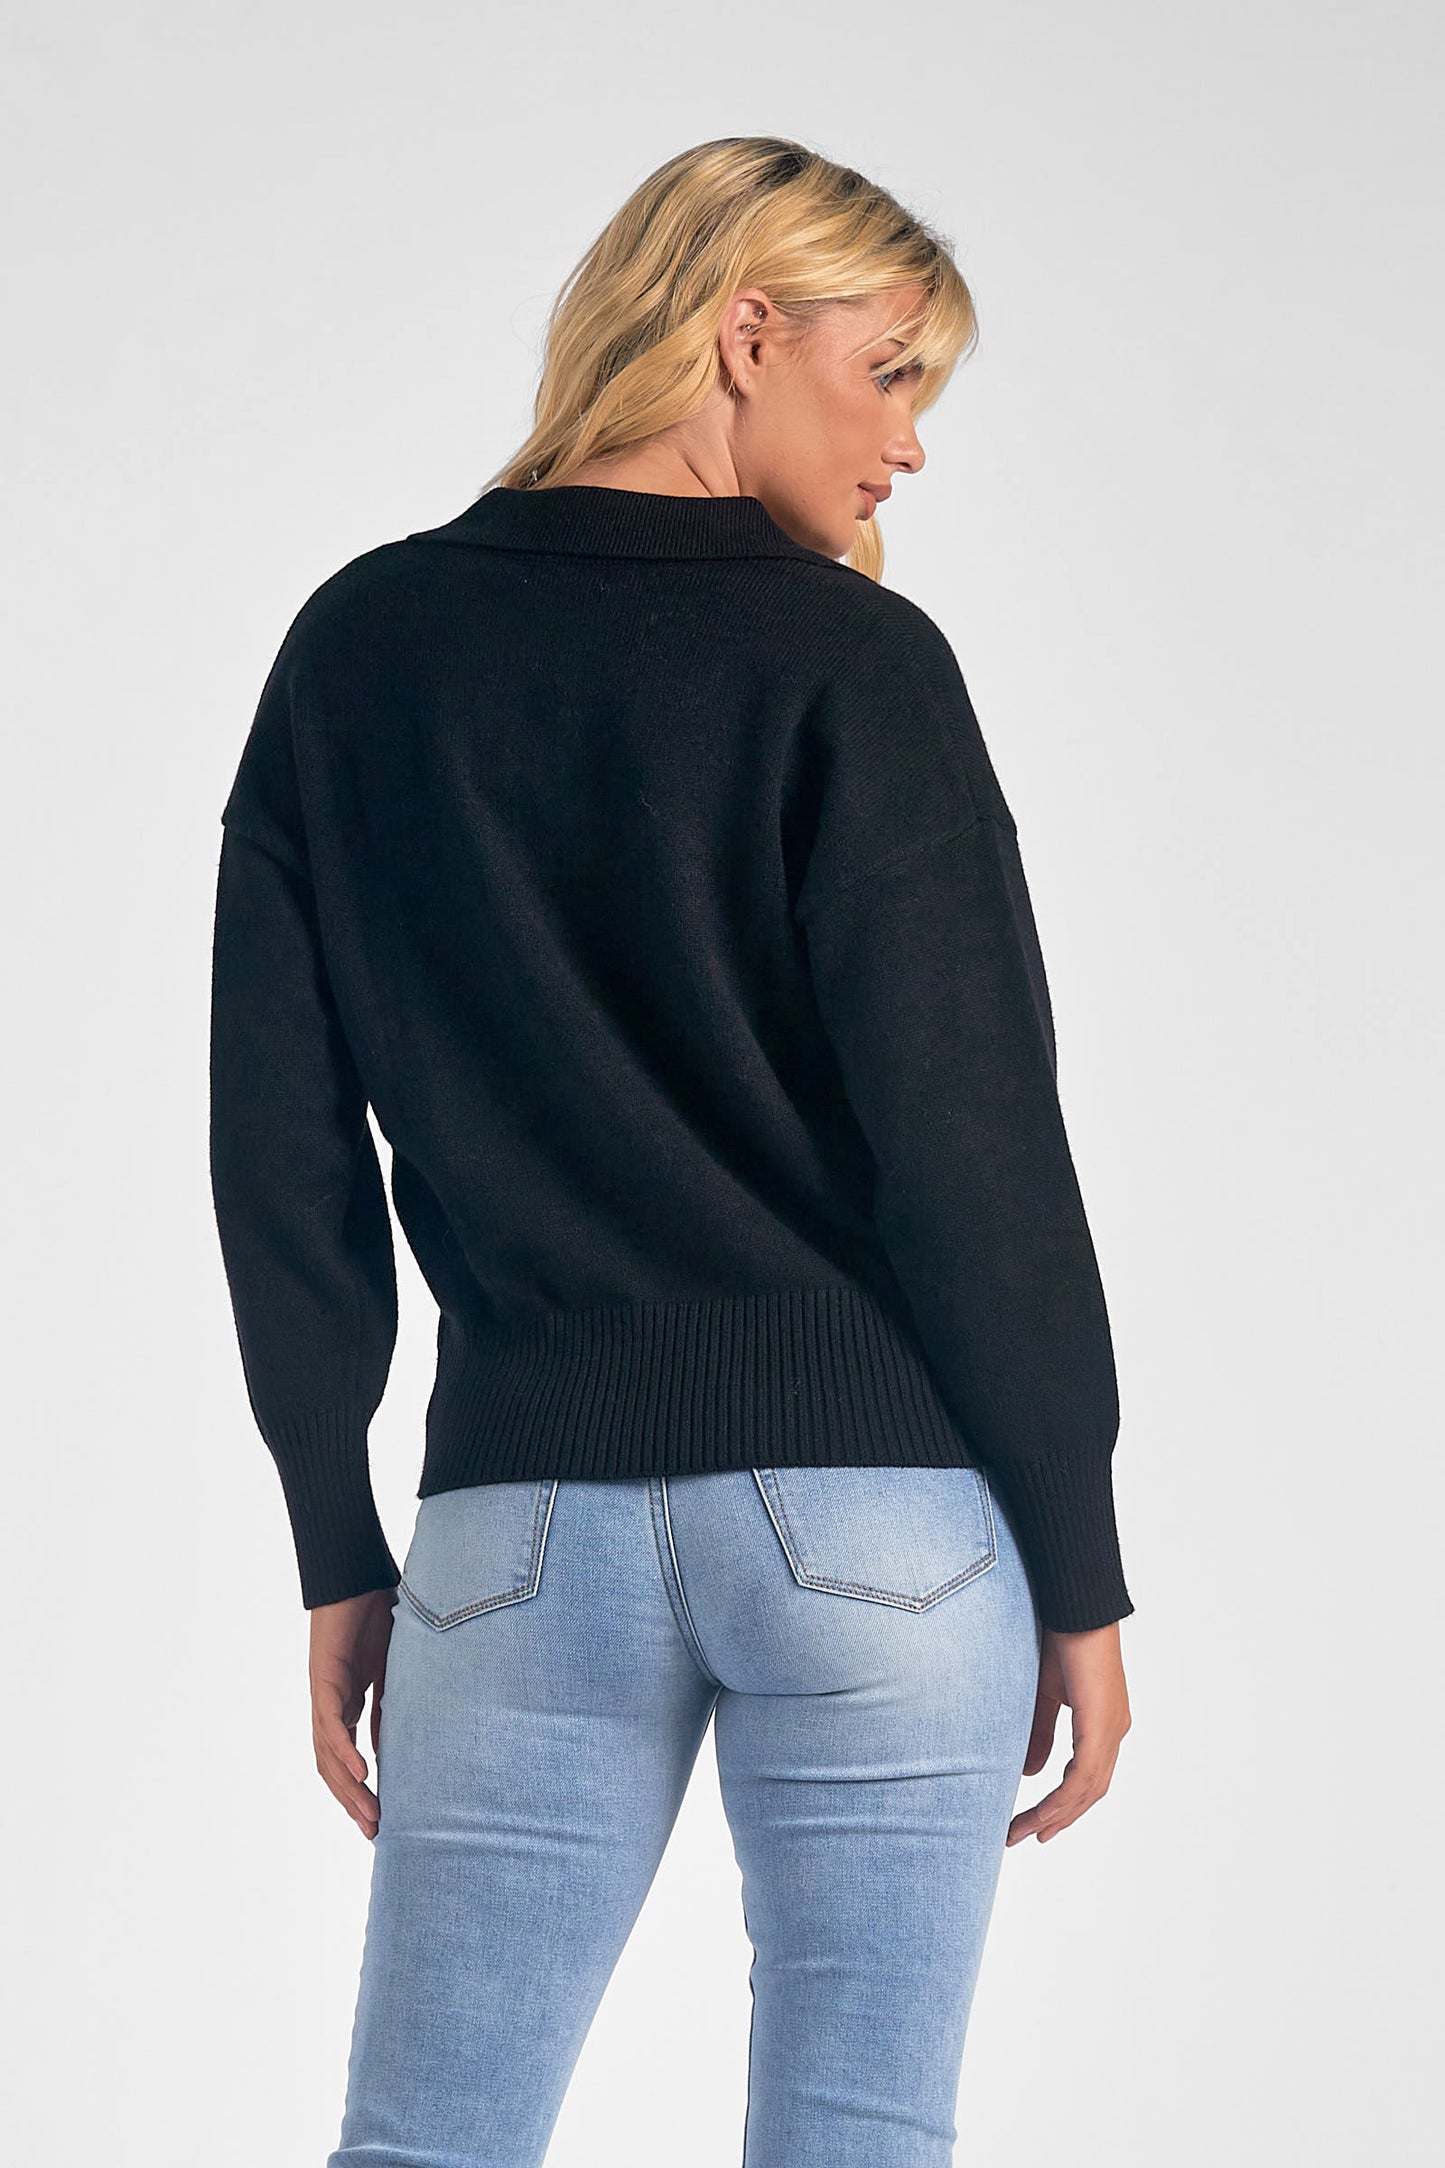 Black V-Neck Collared Sweater